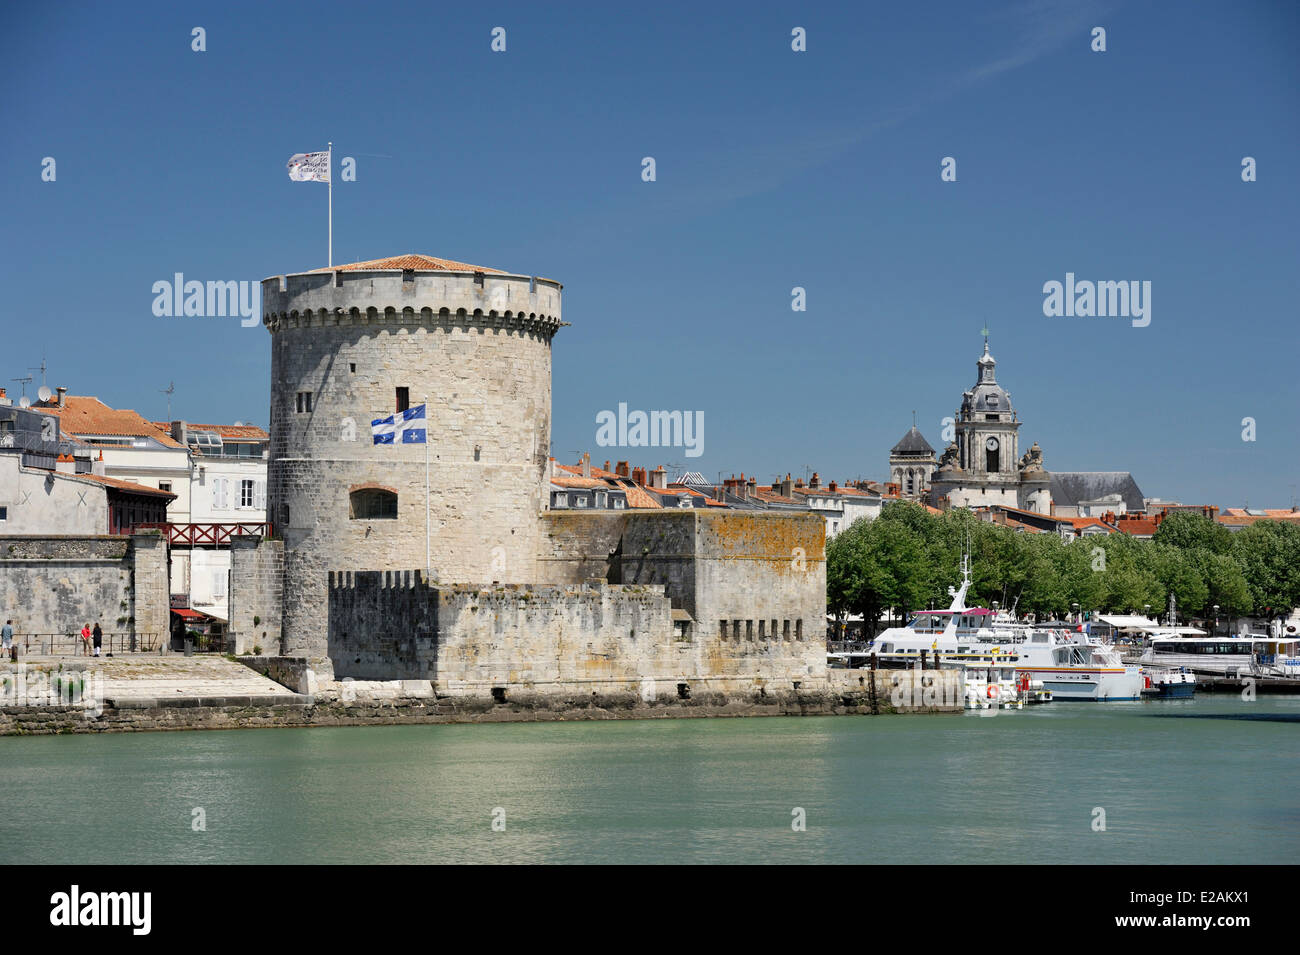 France, Charente Maritime, La Rochelle, tour de la Chaine (Chain tower) in the old port Stock Photo